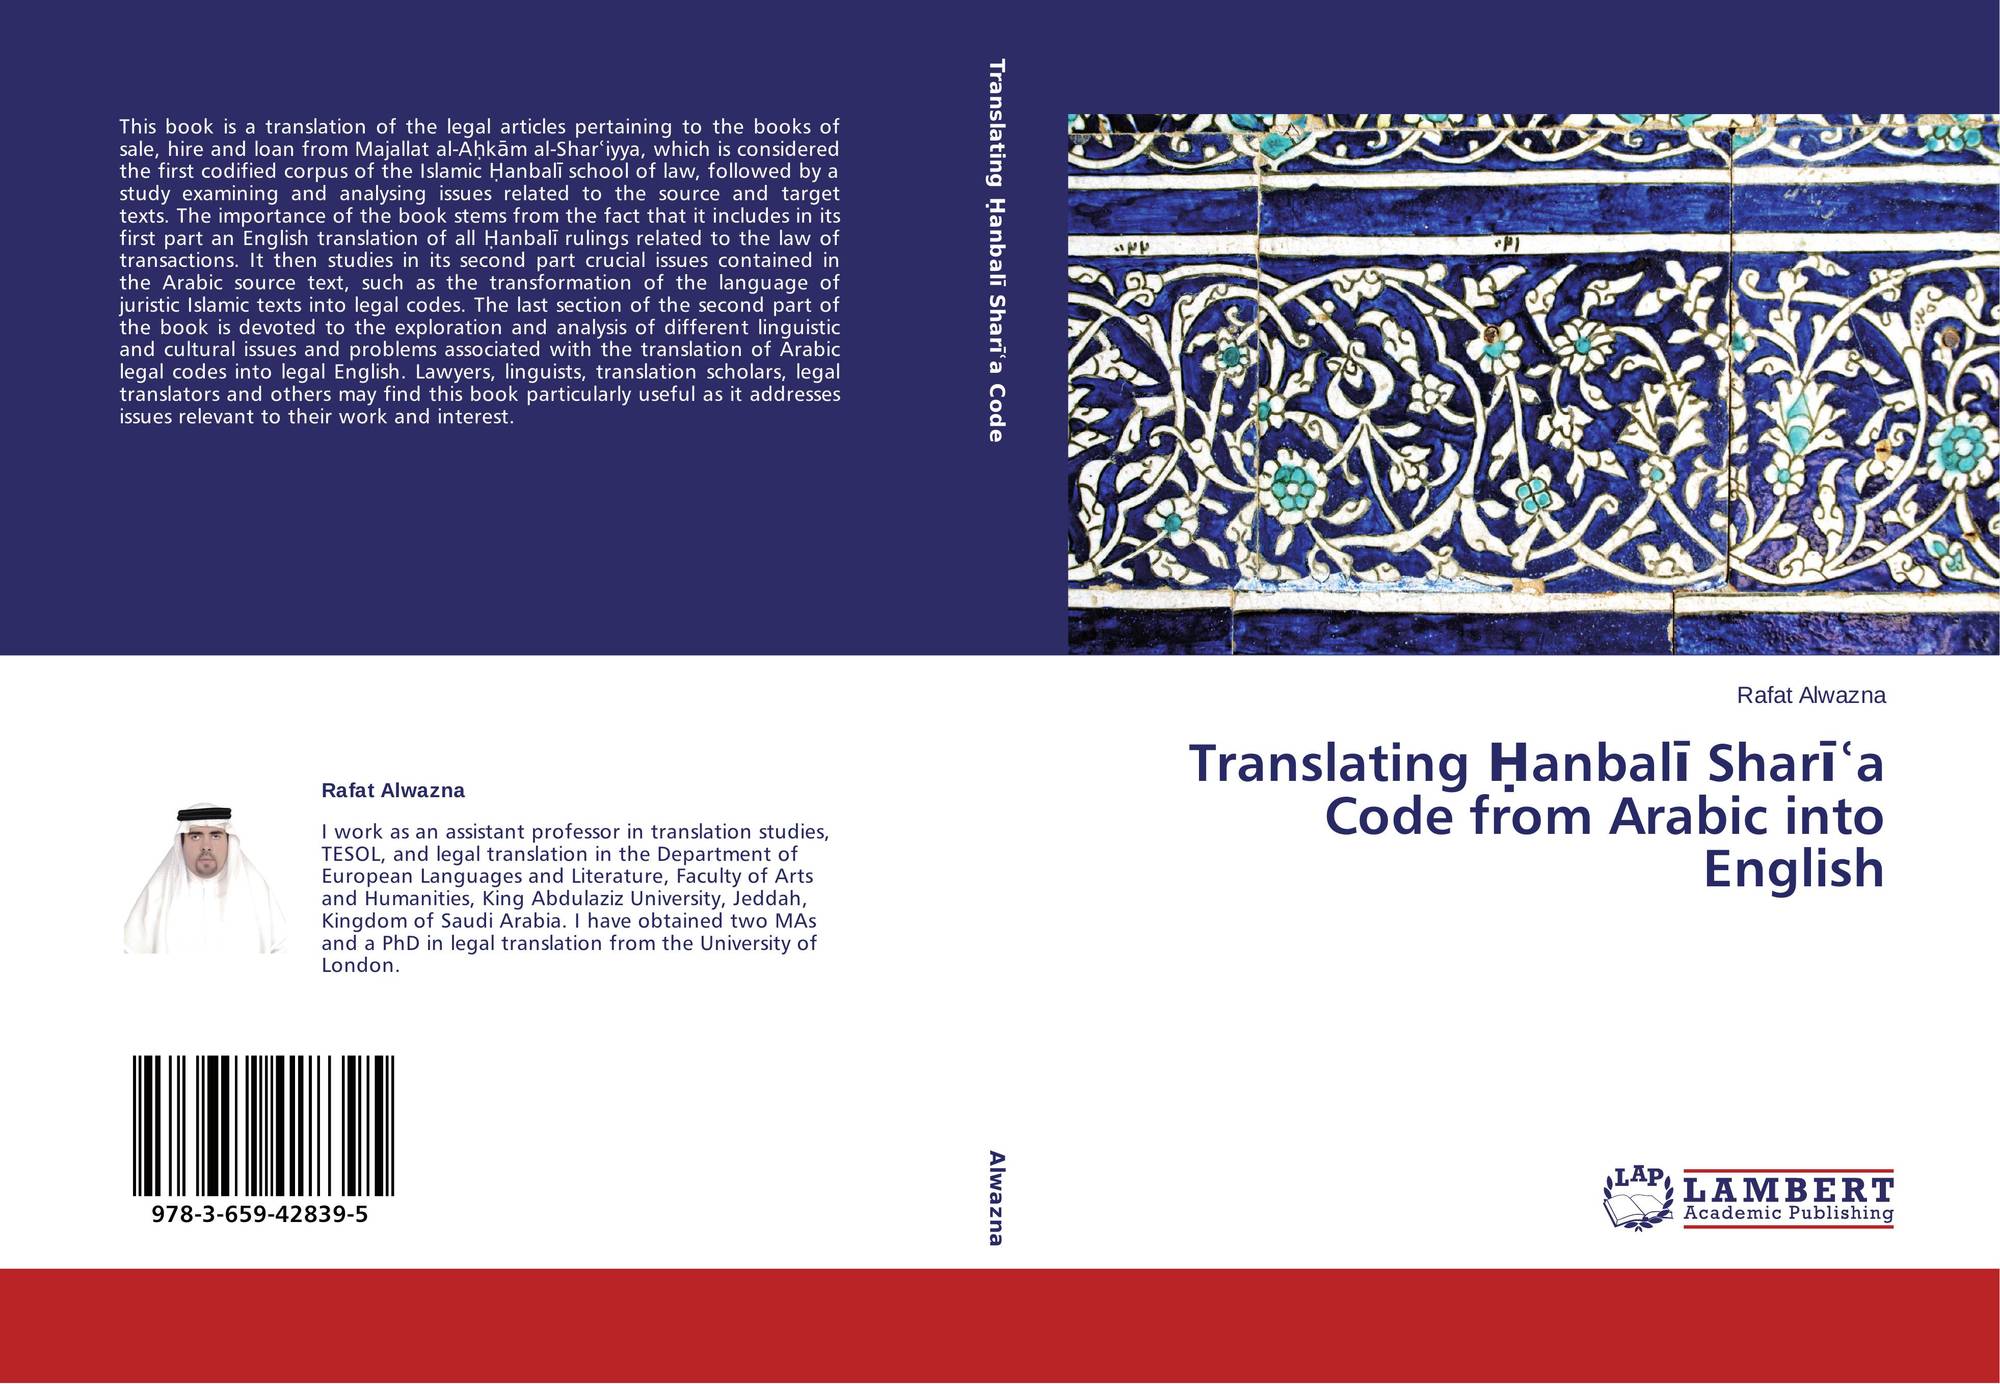 This book перевод. Translating into Arabic. Legal Arabic translation.